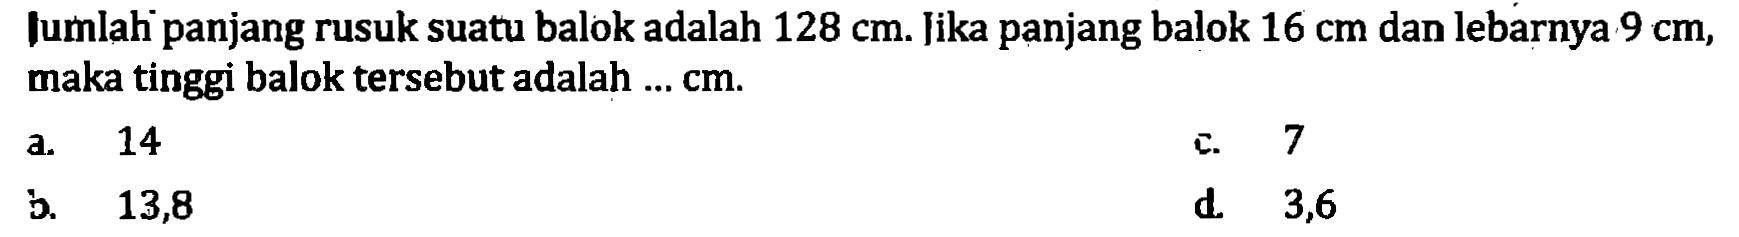 Iumlah panjang rusuk suatu balok adalah  128 cm . Jika panjang balok  16 cm  dan lebarnya  9 cm , maka tinggi balok tersebut adalah ...  cm .
a. 14
c. 7
b. 13,8
d. 3,6